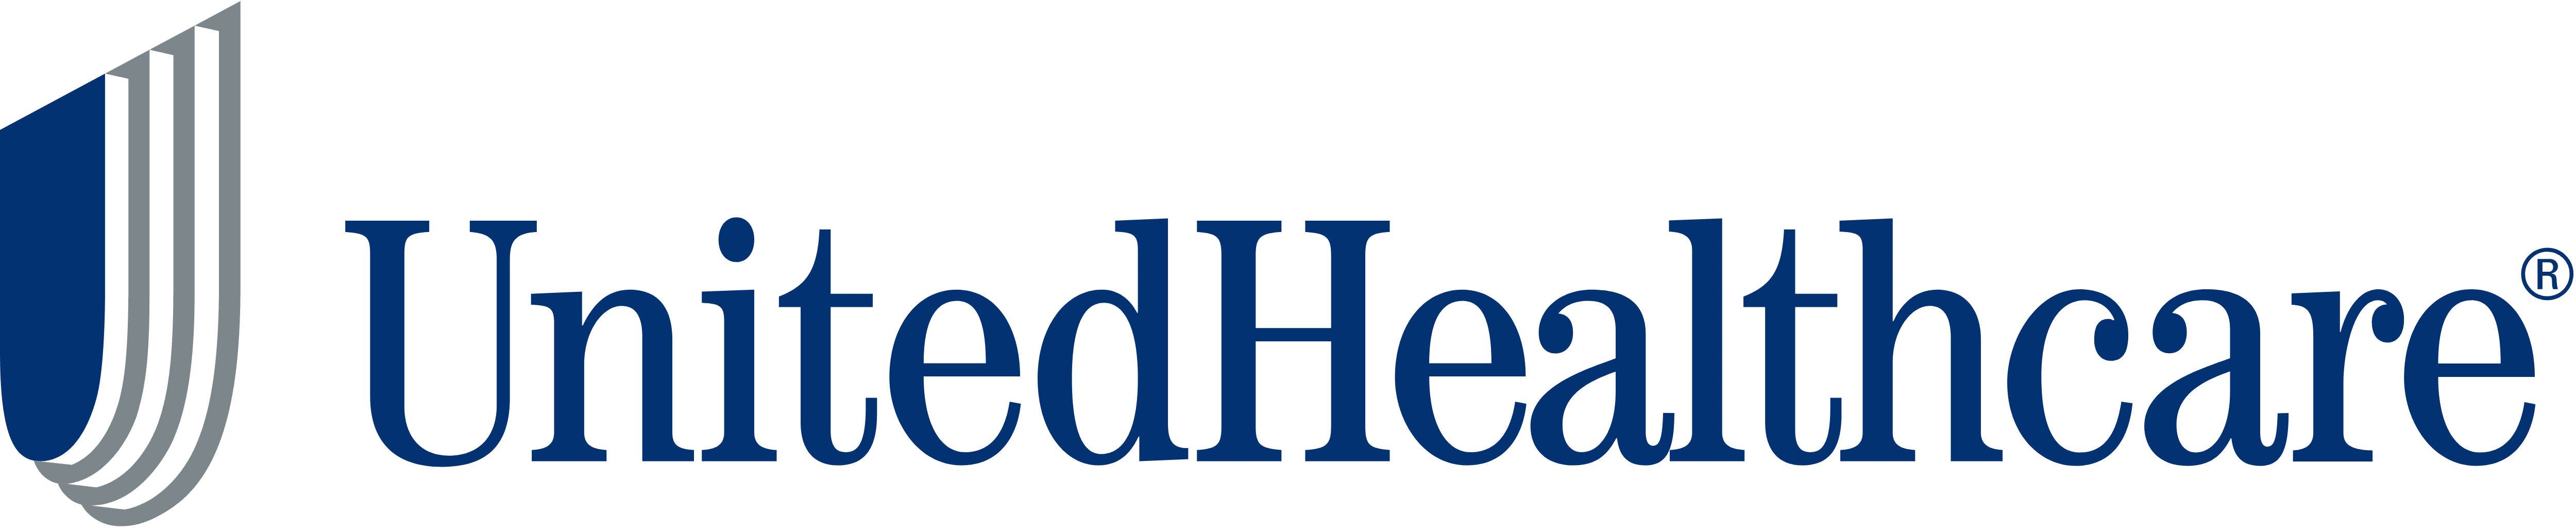 Unitedhealthcare-logo-1977-2020